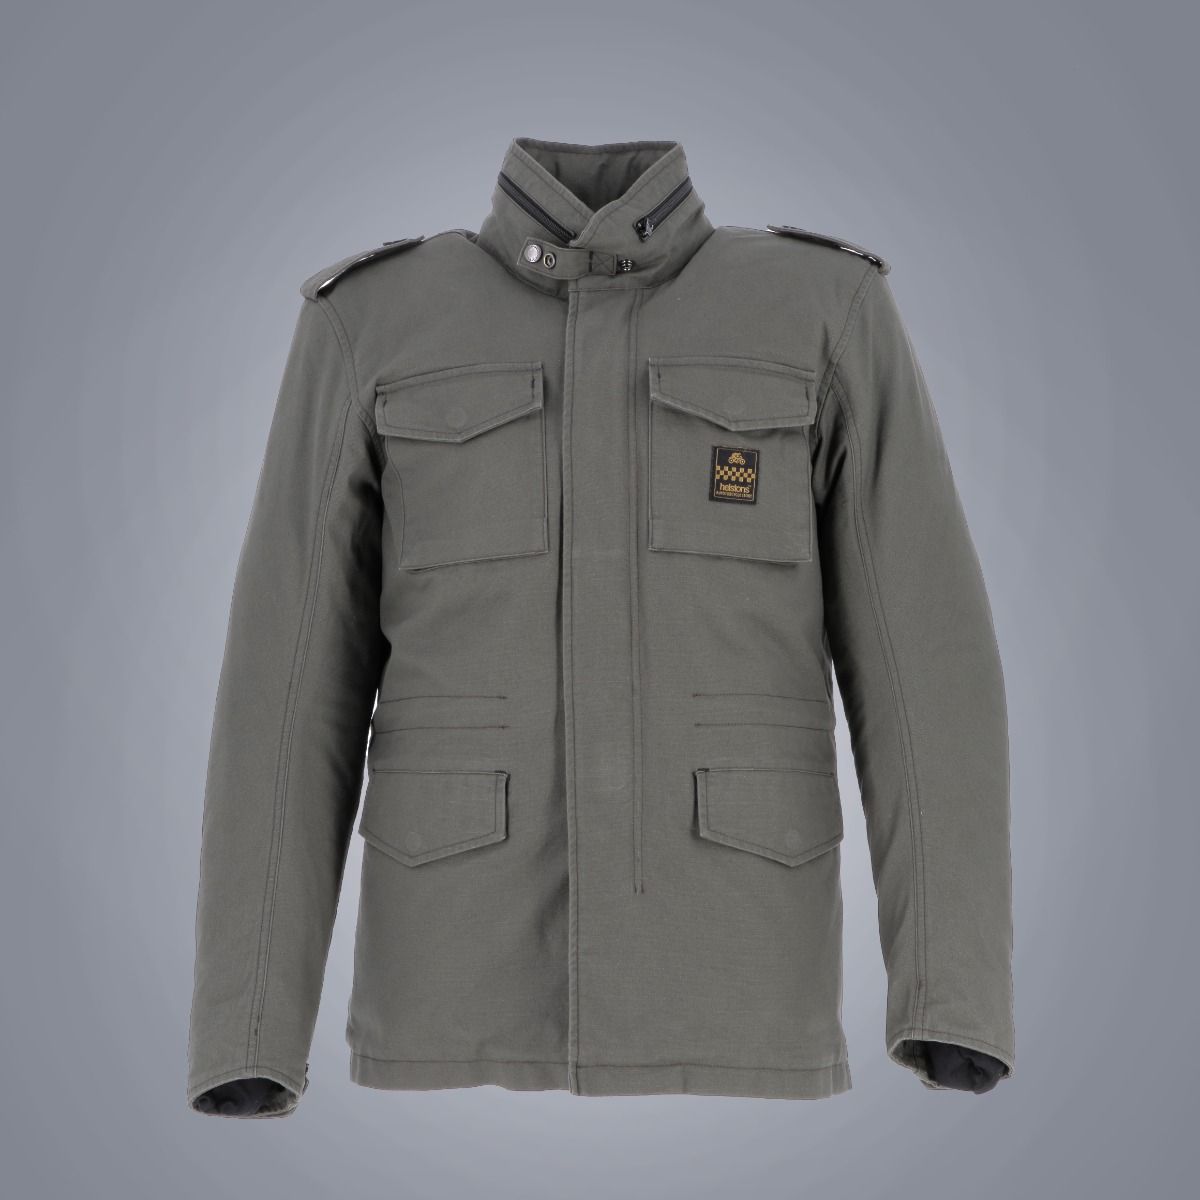 Image of Helstons Division Jacket Khaki Size XL ID 3662136100787